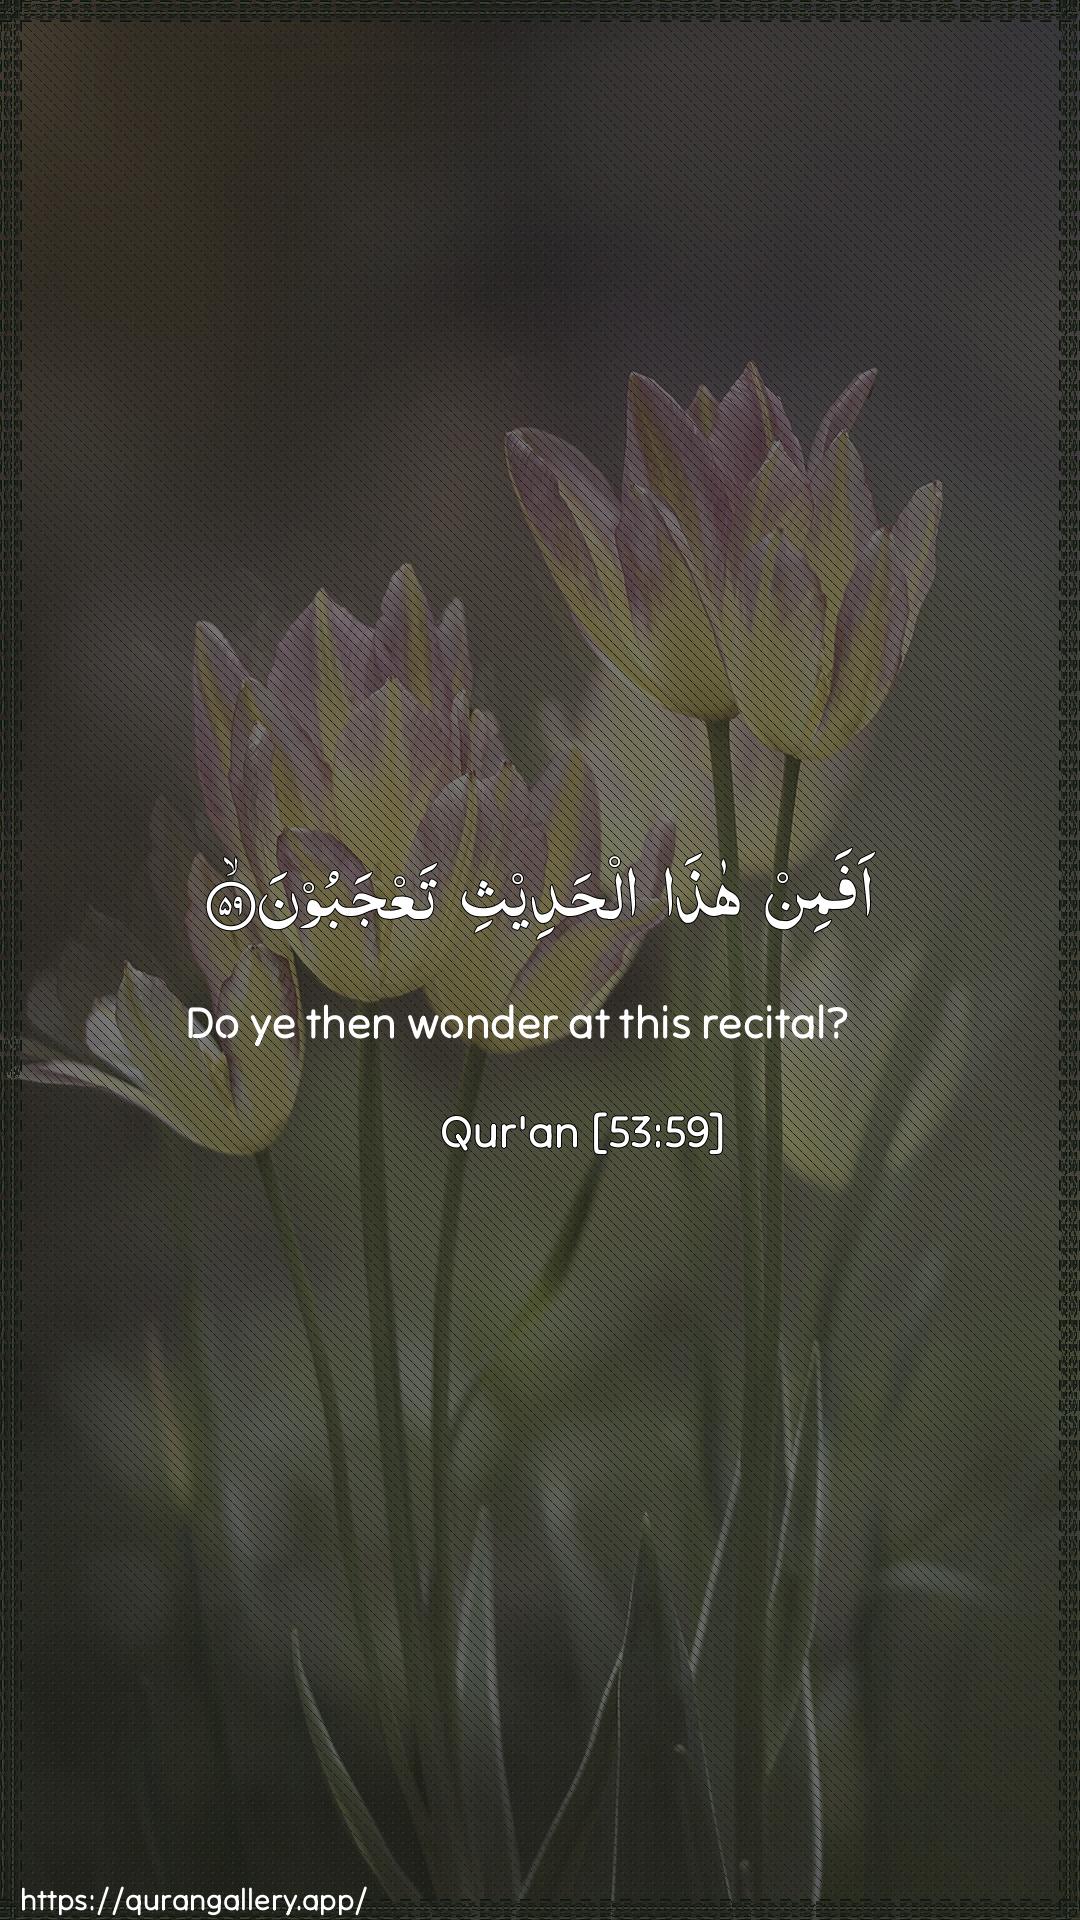 Surah An-Najm Ayah 59 of 53 HD Wallpaper: Download Beautiful vertical Quran Verse Image | Afamin hatha alhadeethitaAAjaboon